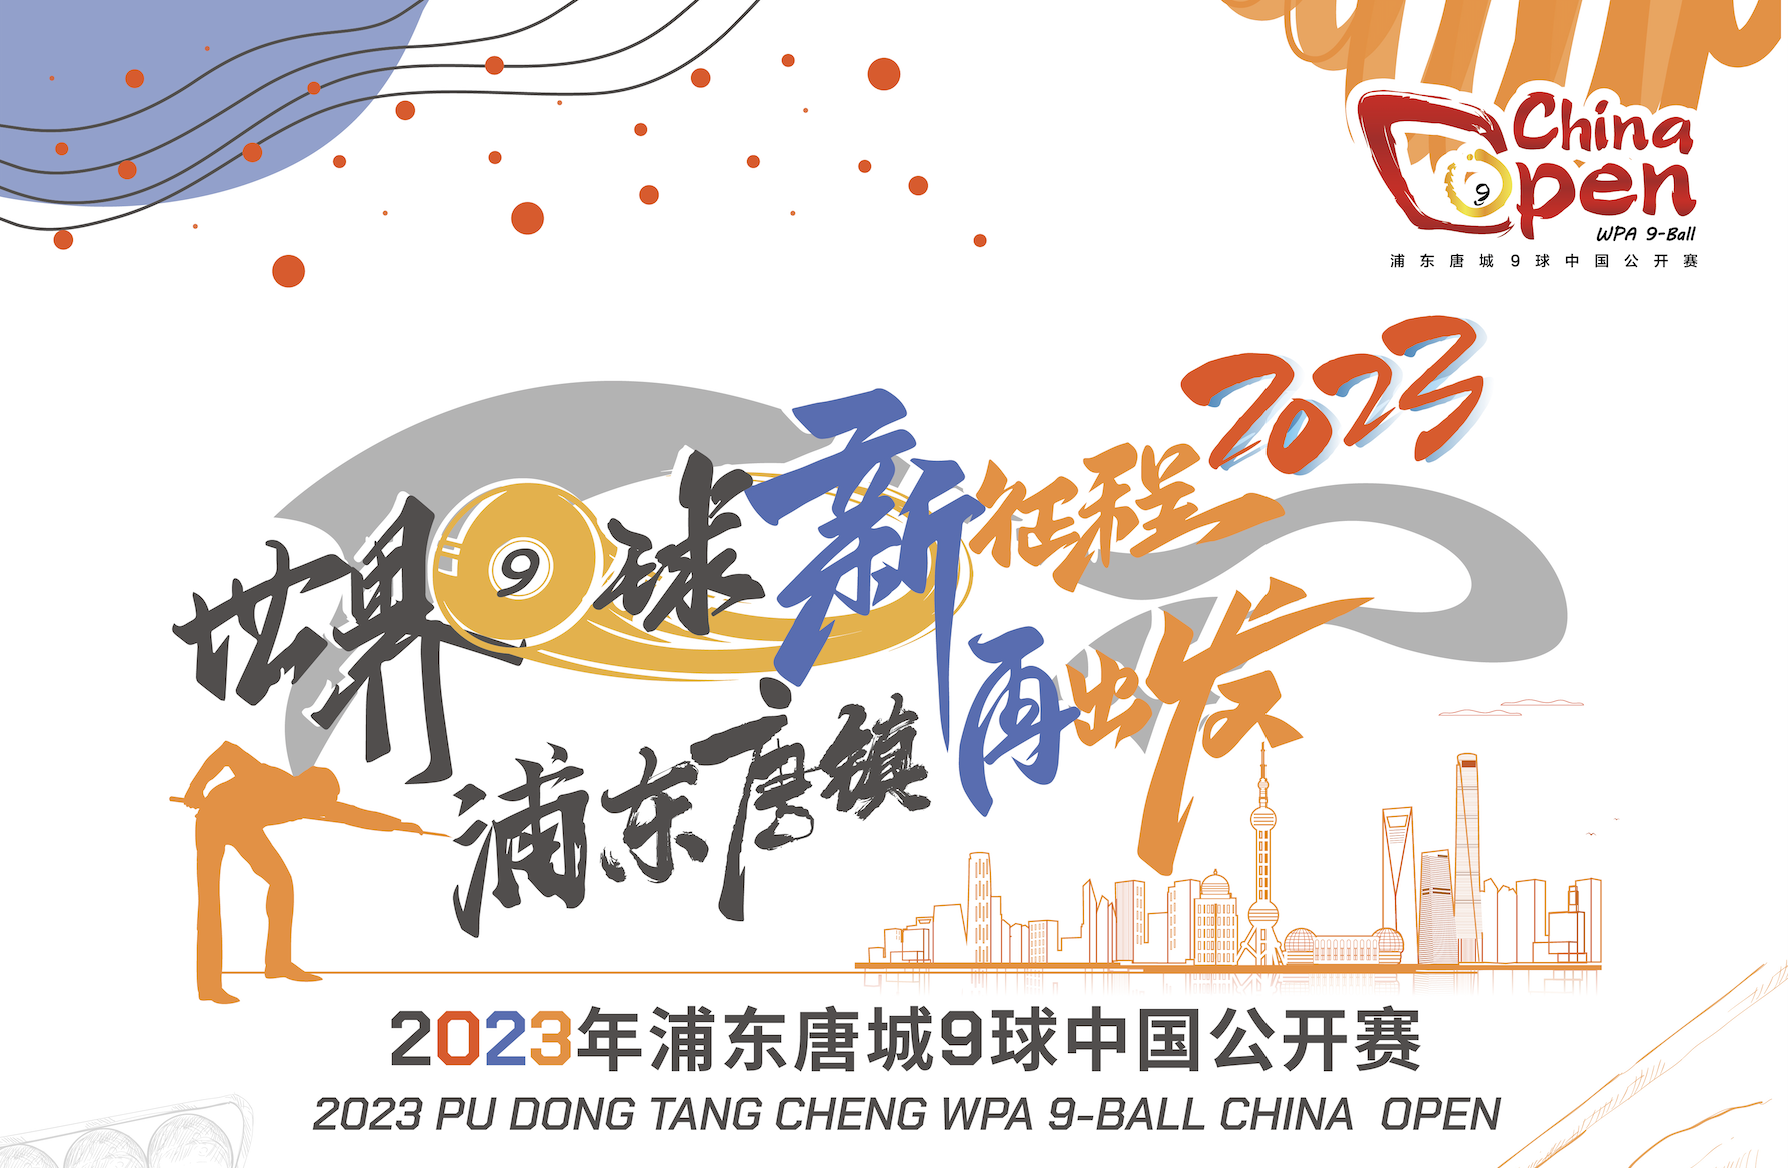 2023 Pudong Tangcheng World 9-ball China Open